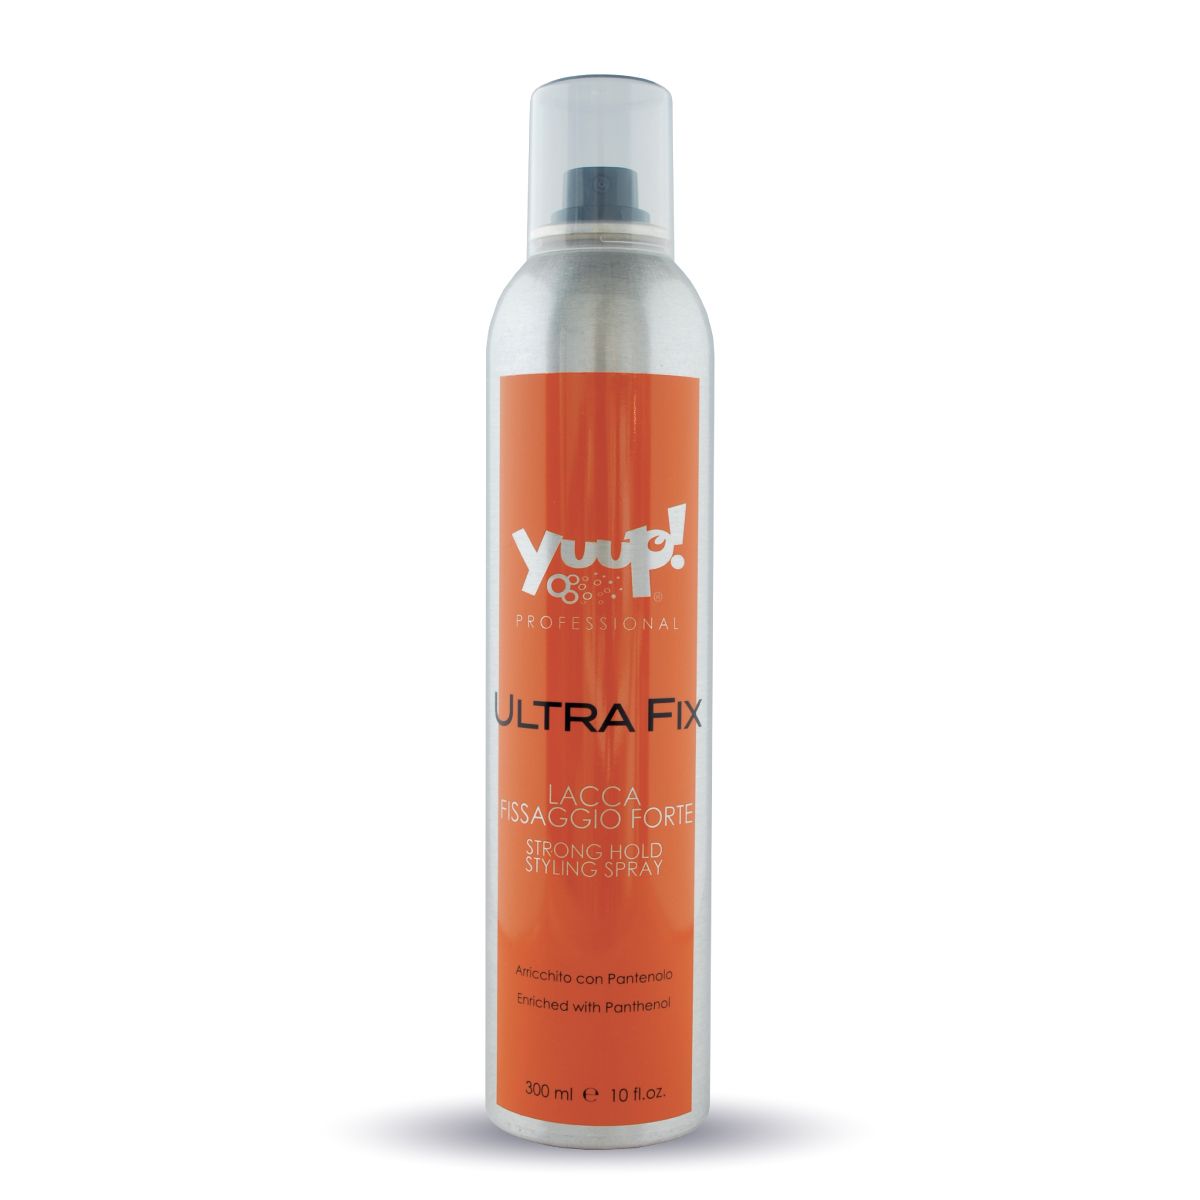 Yuup! Professional Spray Ultra Fix